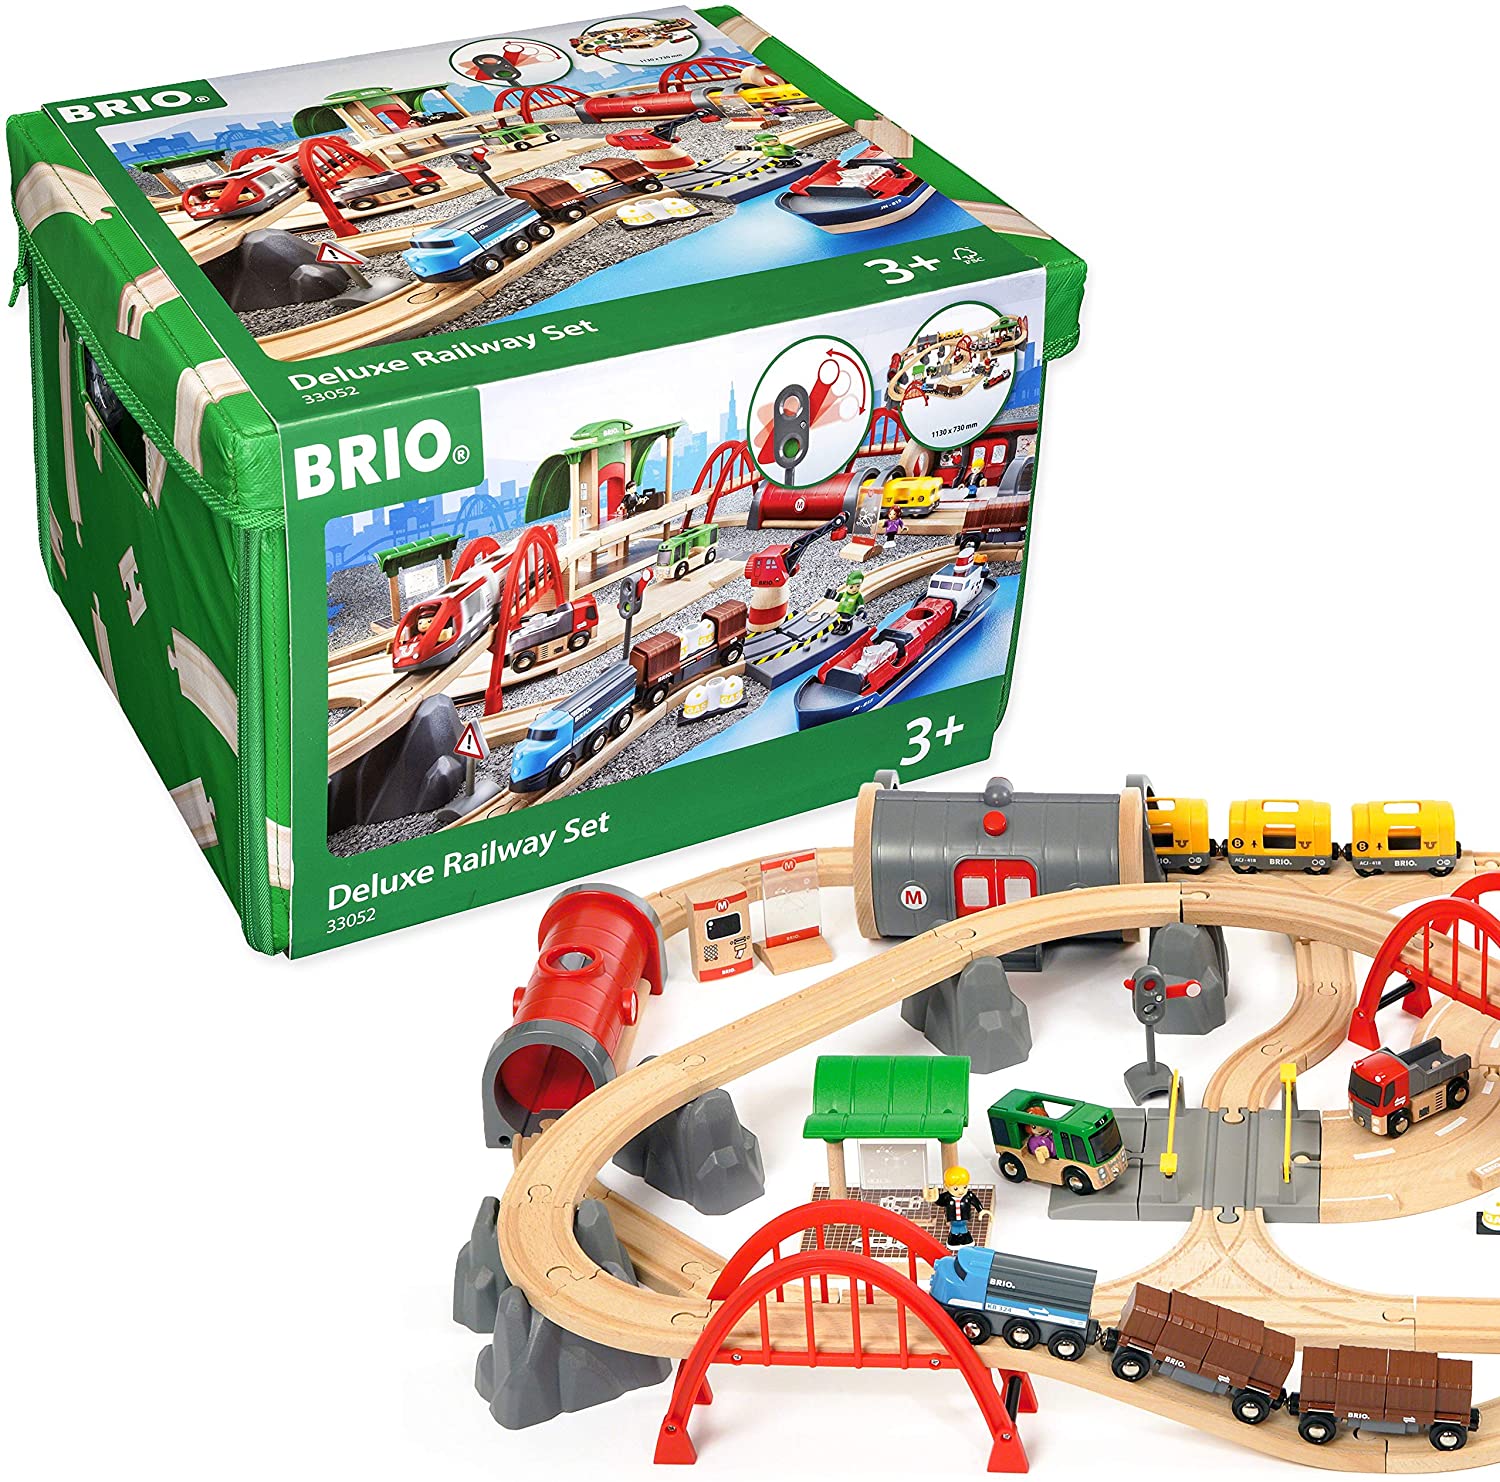 BRIO Deluxe Railway Set